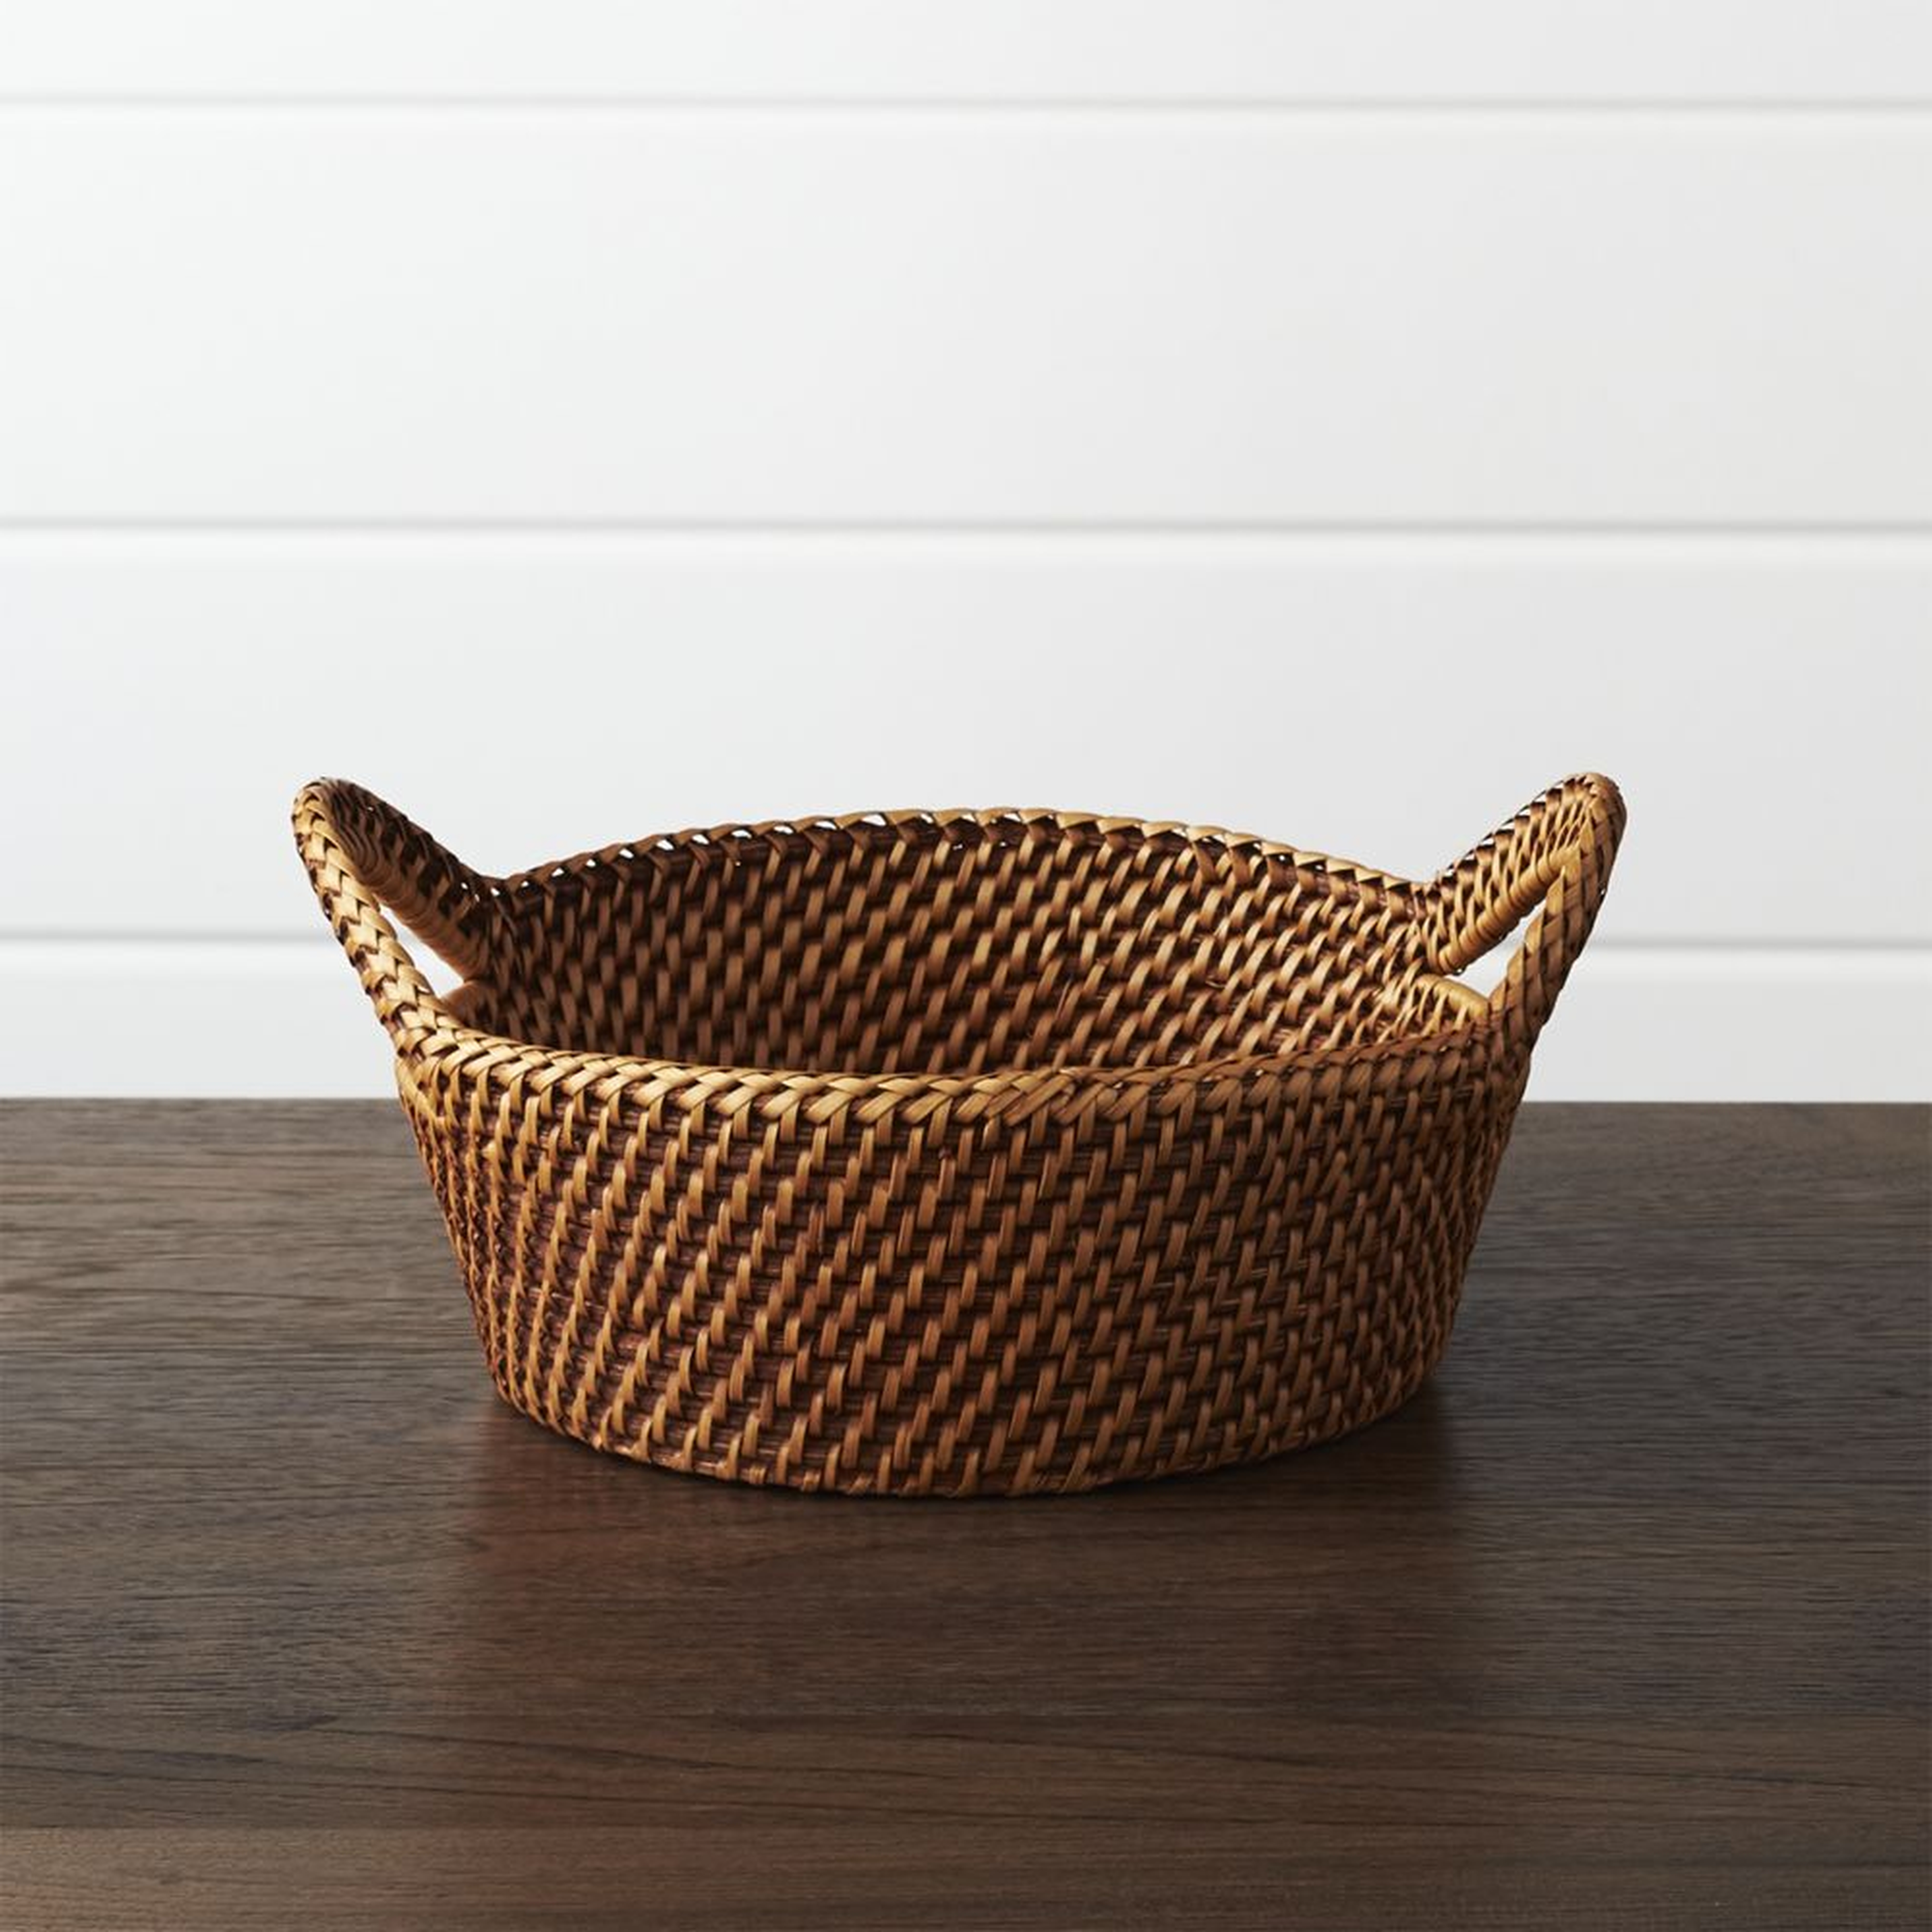 Artesia Small Honey Bread Basket - Crate and Barrel